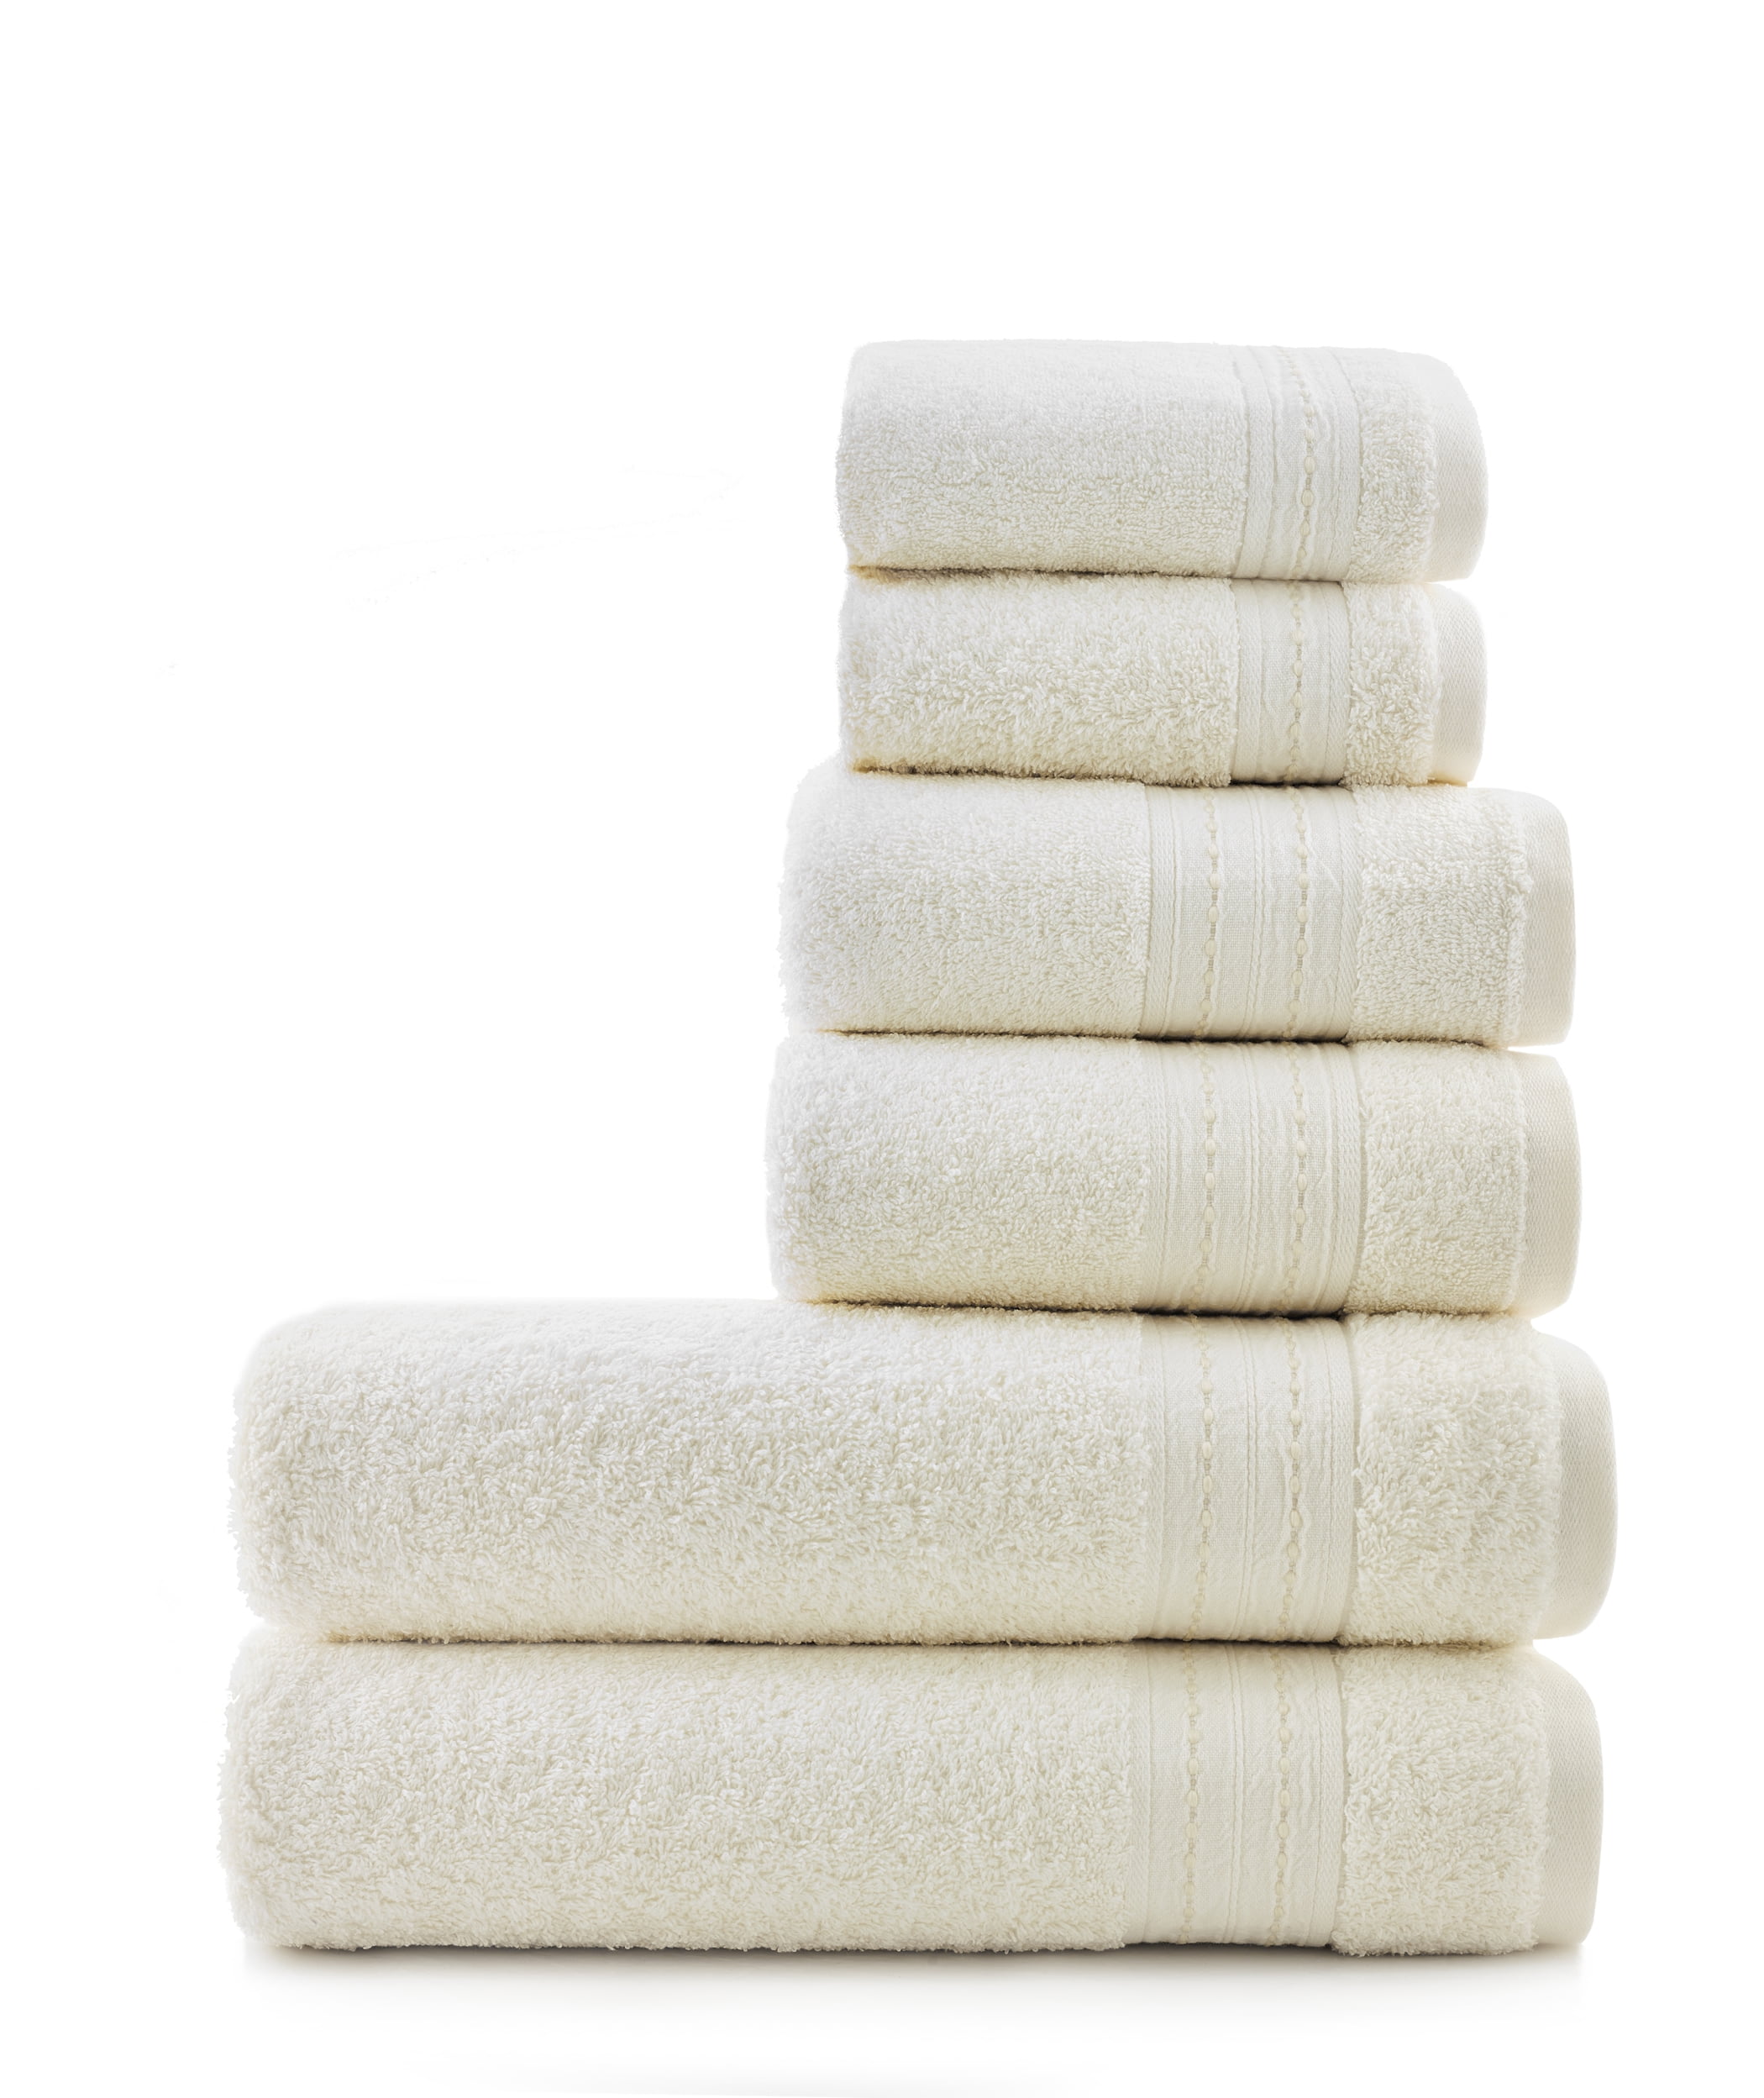 6 Piece Coolwater Textured Bath Towel Set Machine Washable Cotton Washcloths